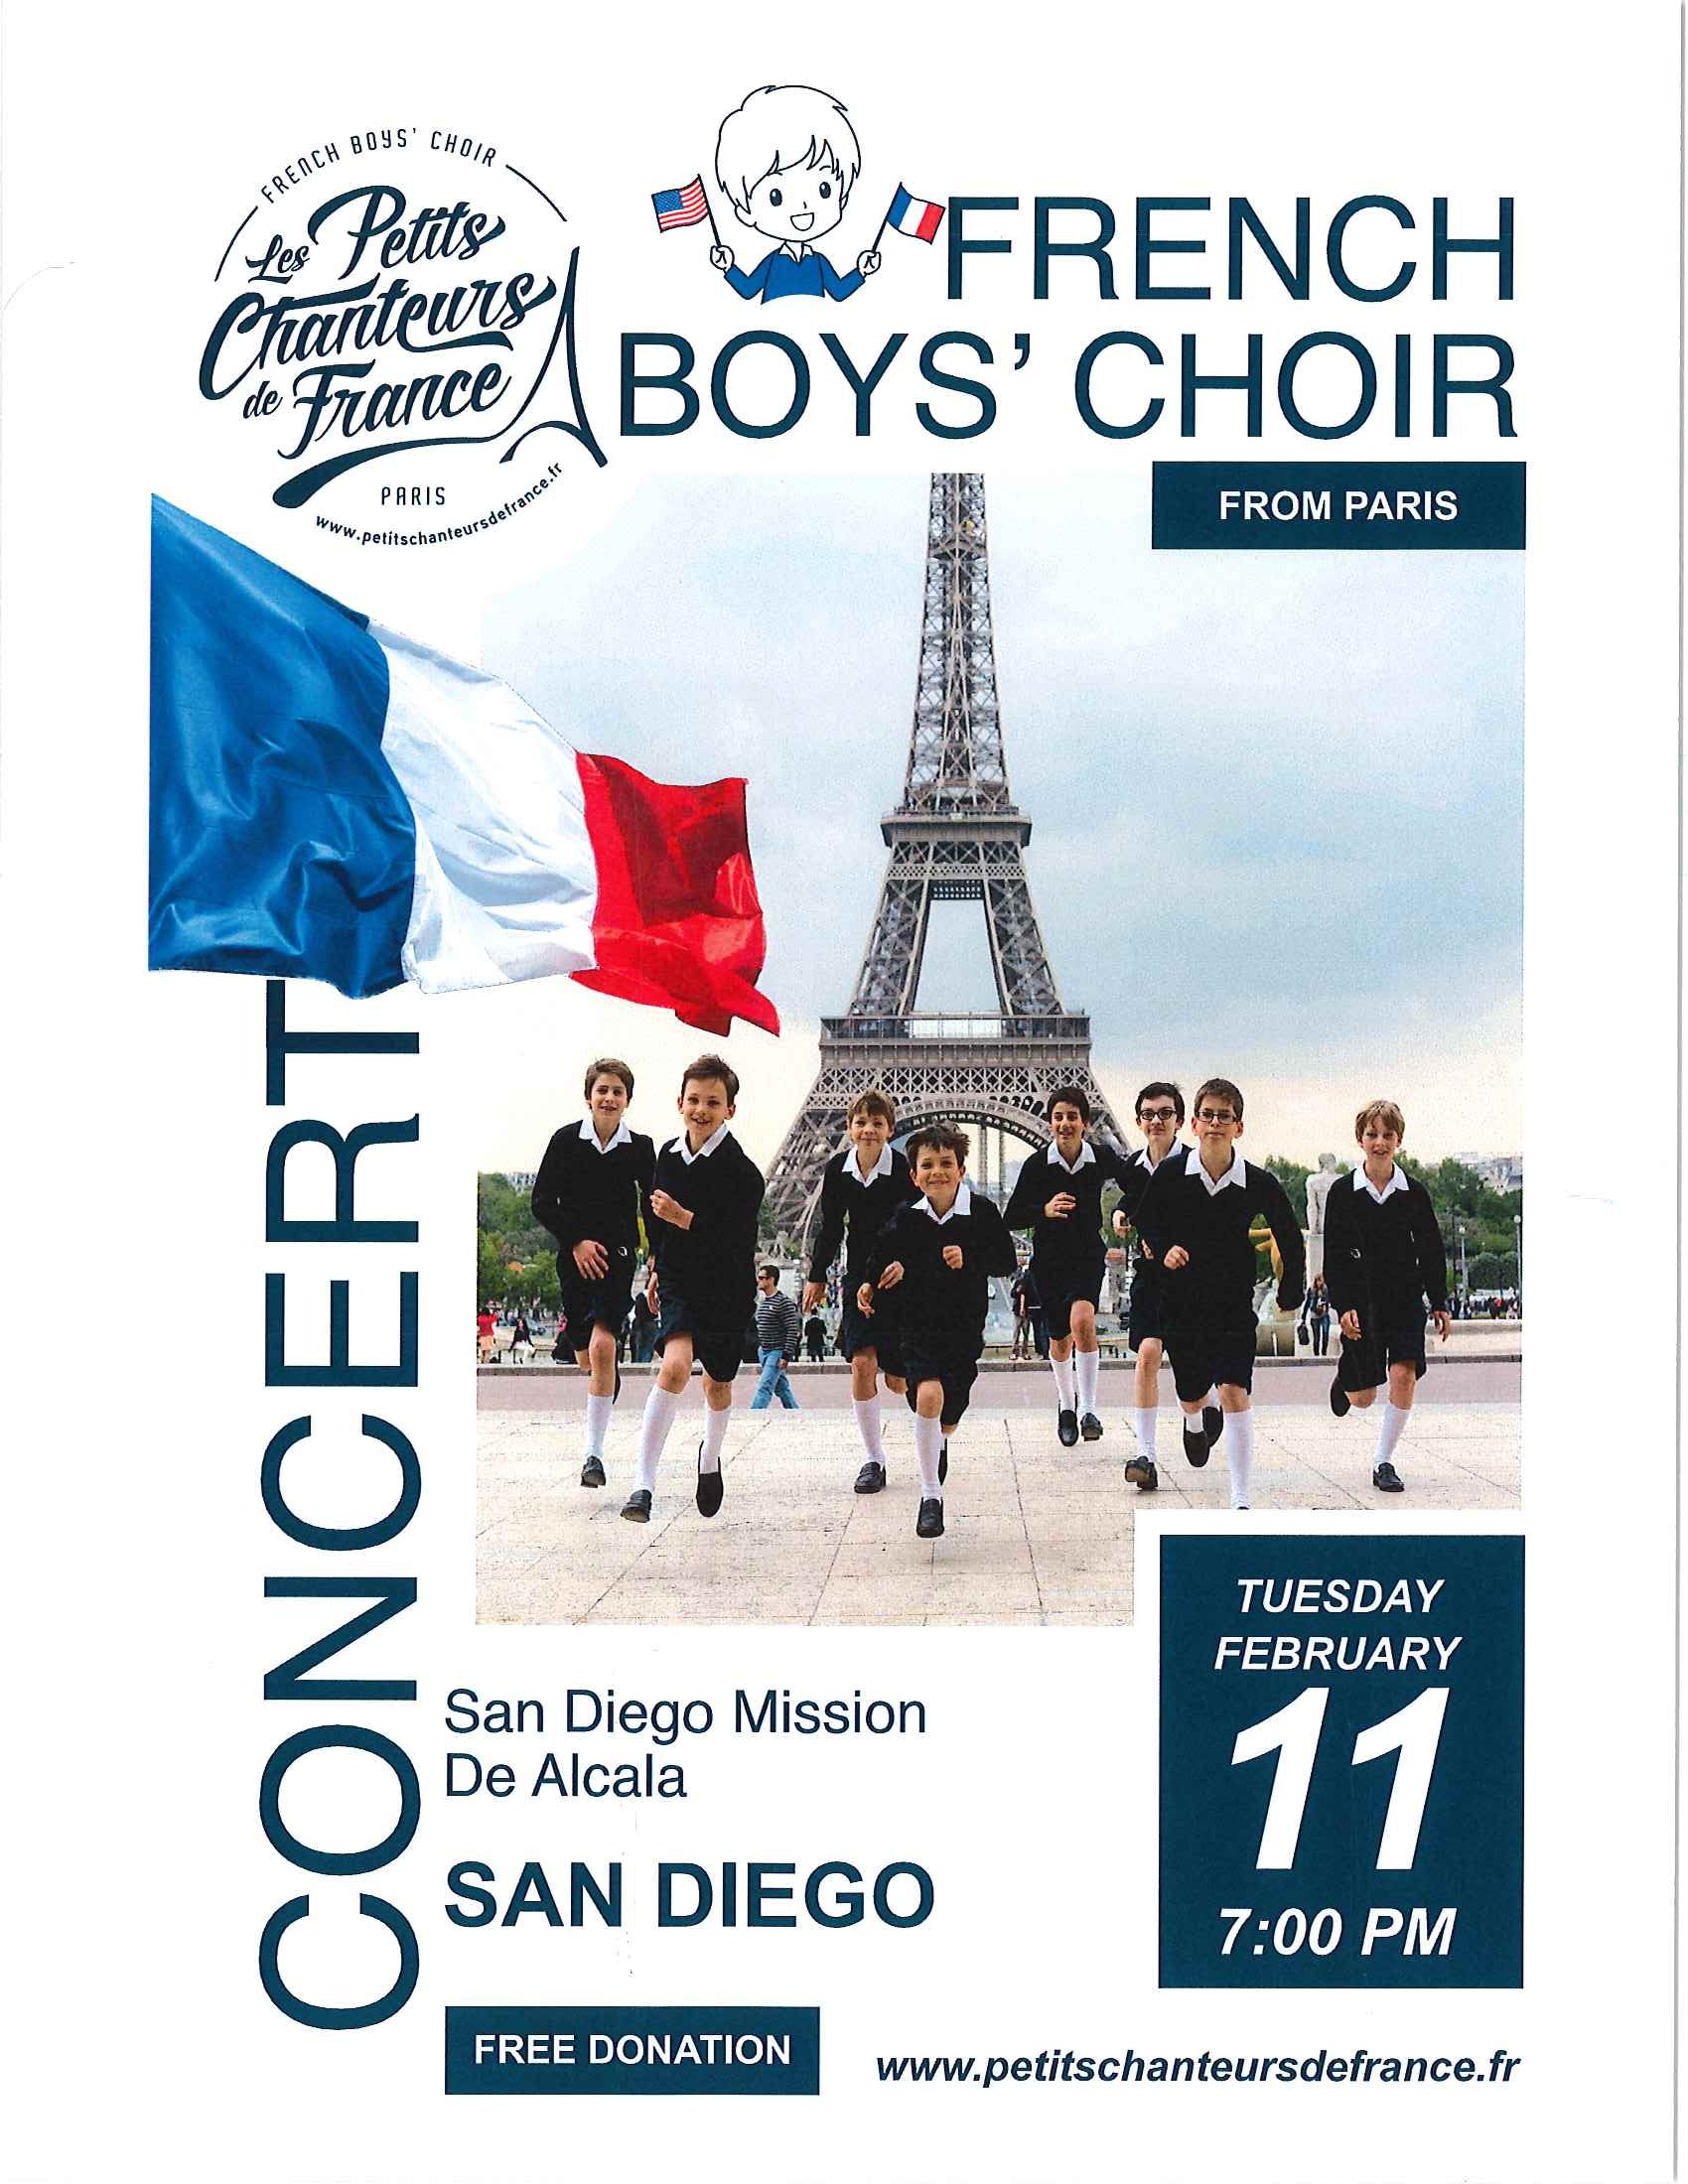 French Boys' Choir from Paris